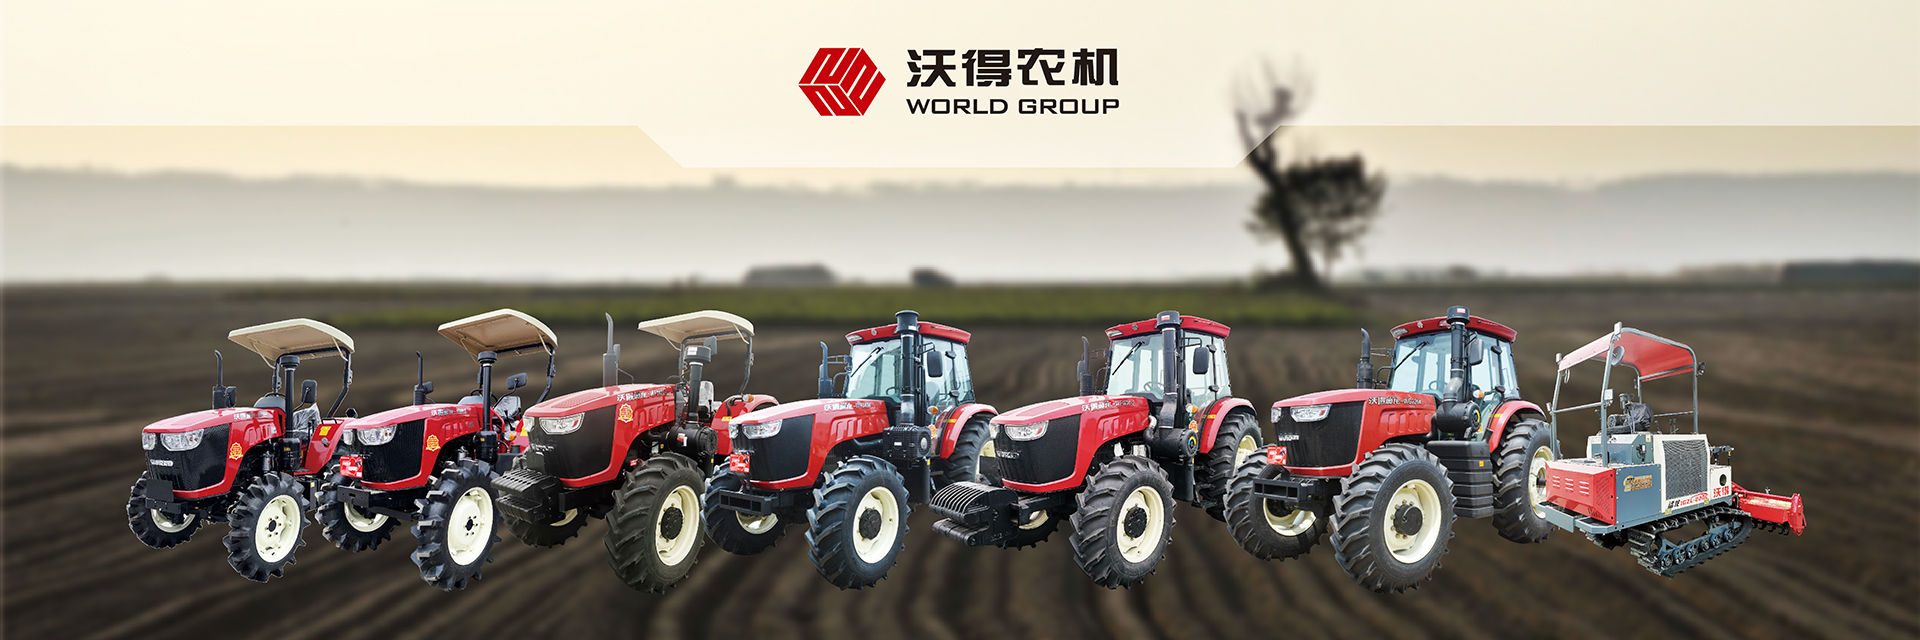 Farm agriculture 70hp tractors